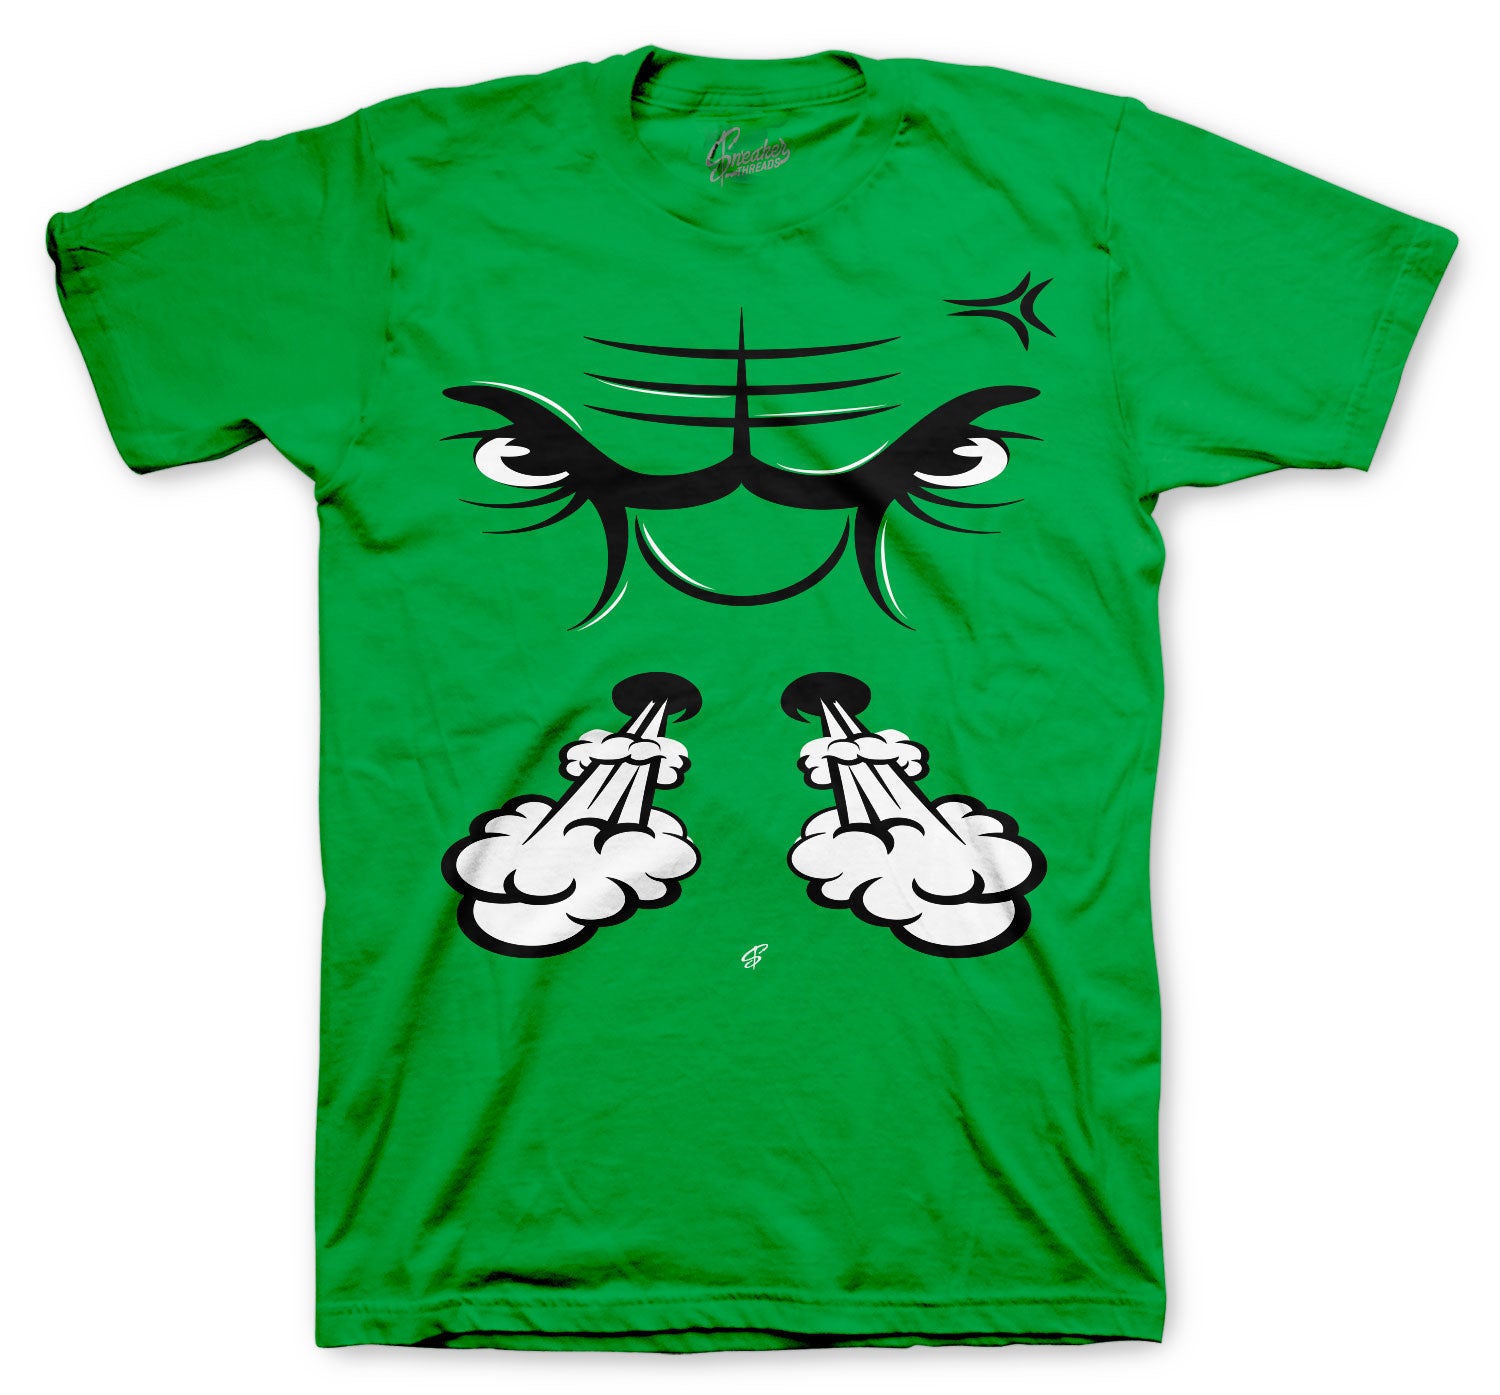 Raging Face T-Shirt - Retro 3 Pine Green